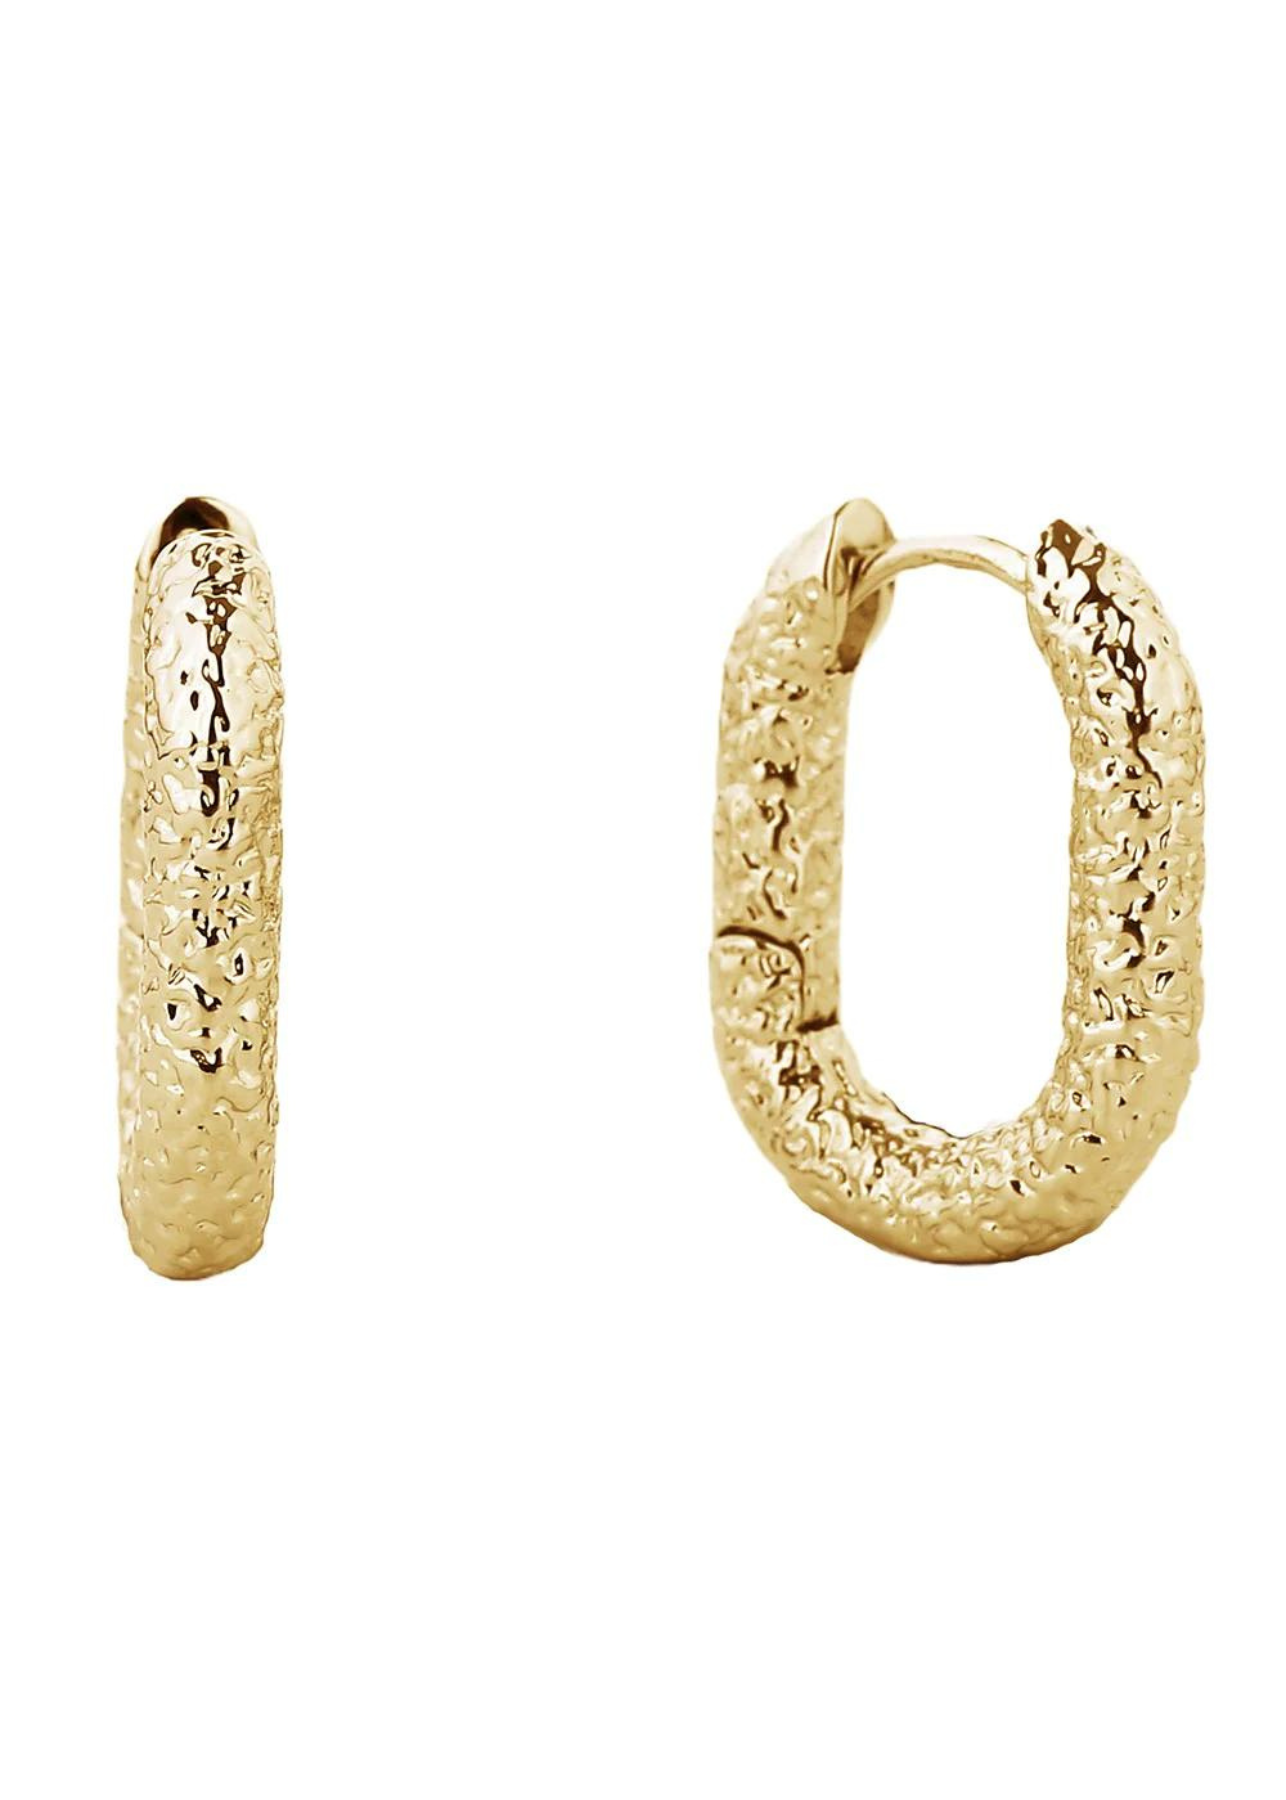 Hooped Neda gold earrings